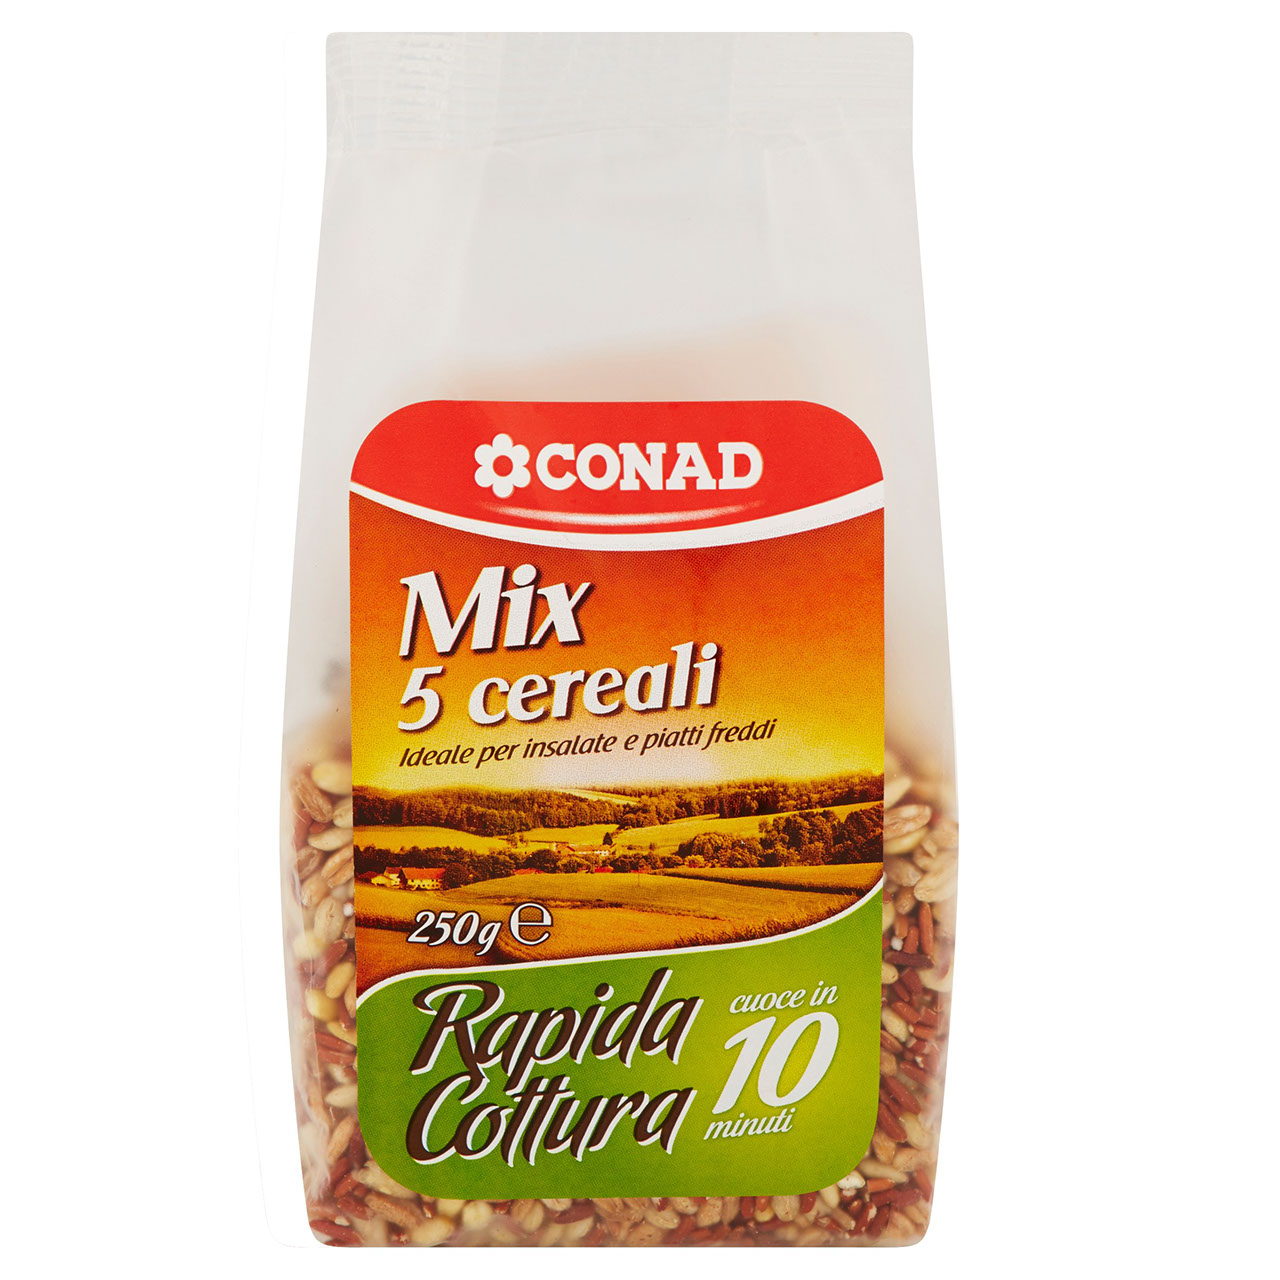 Mix 5 cereali Conad in vendita online